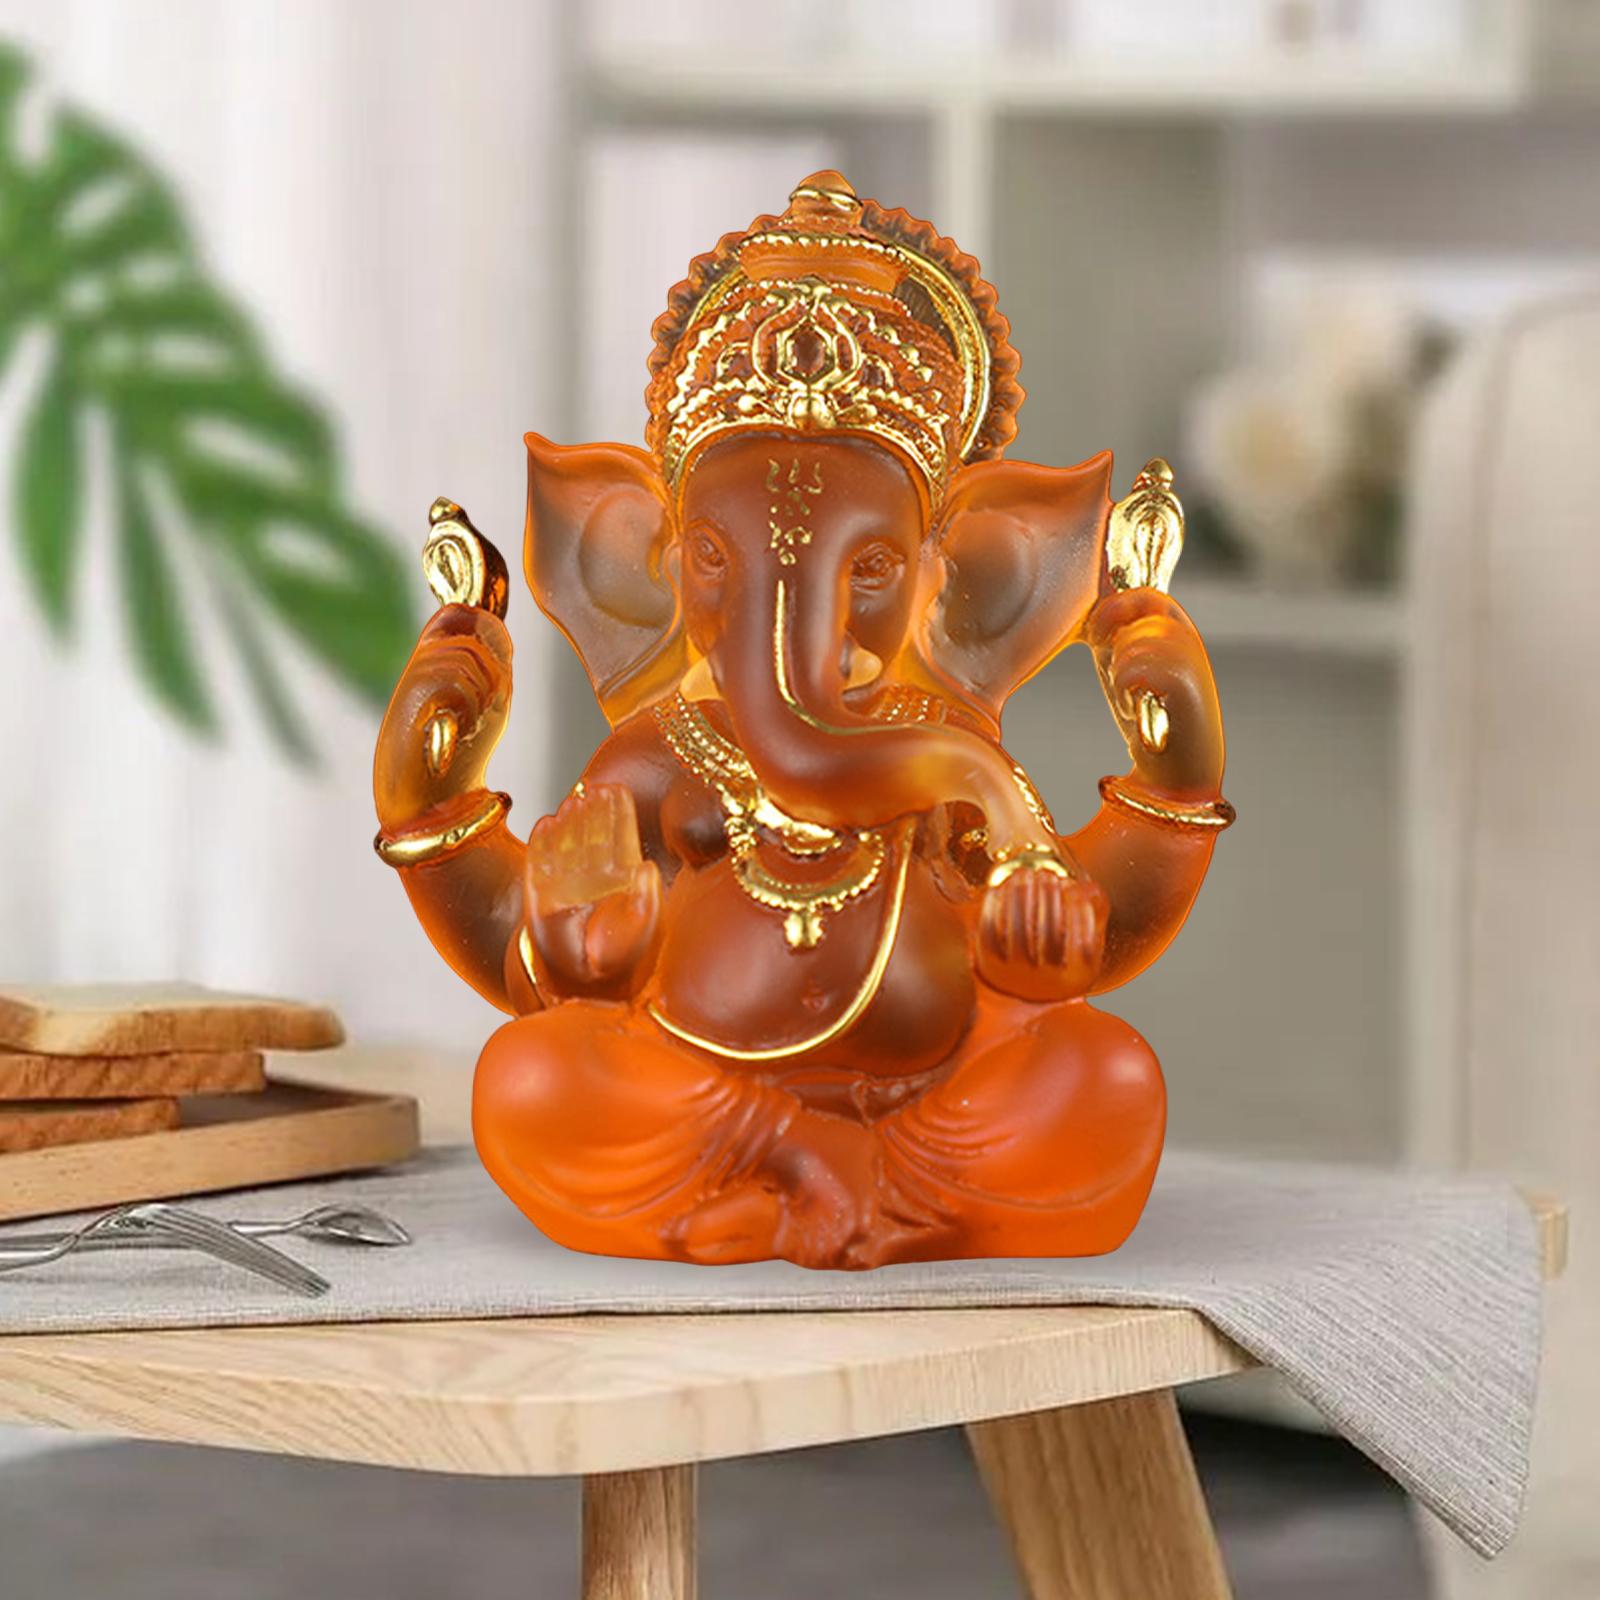 Ganesha Figurine Indian Fengshui Lord Ganesh Statues Home Ornaments Crafts Orange